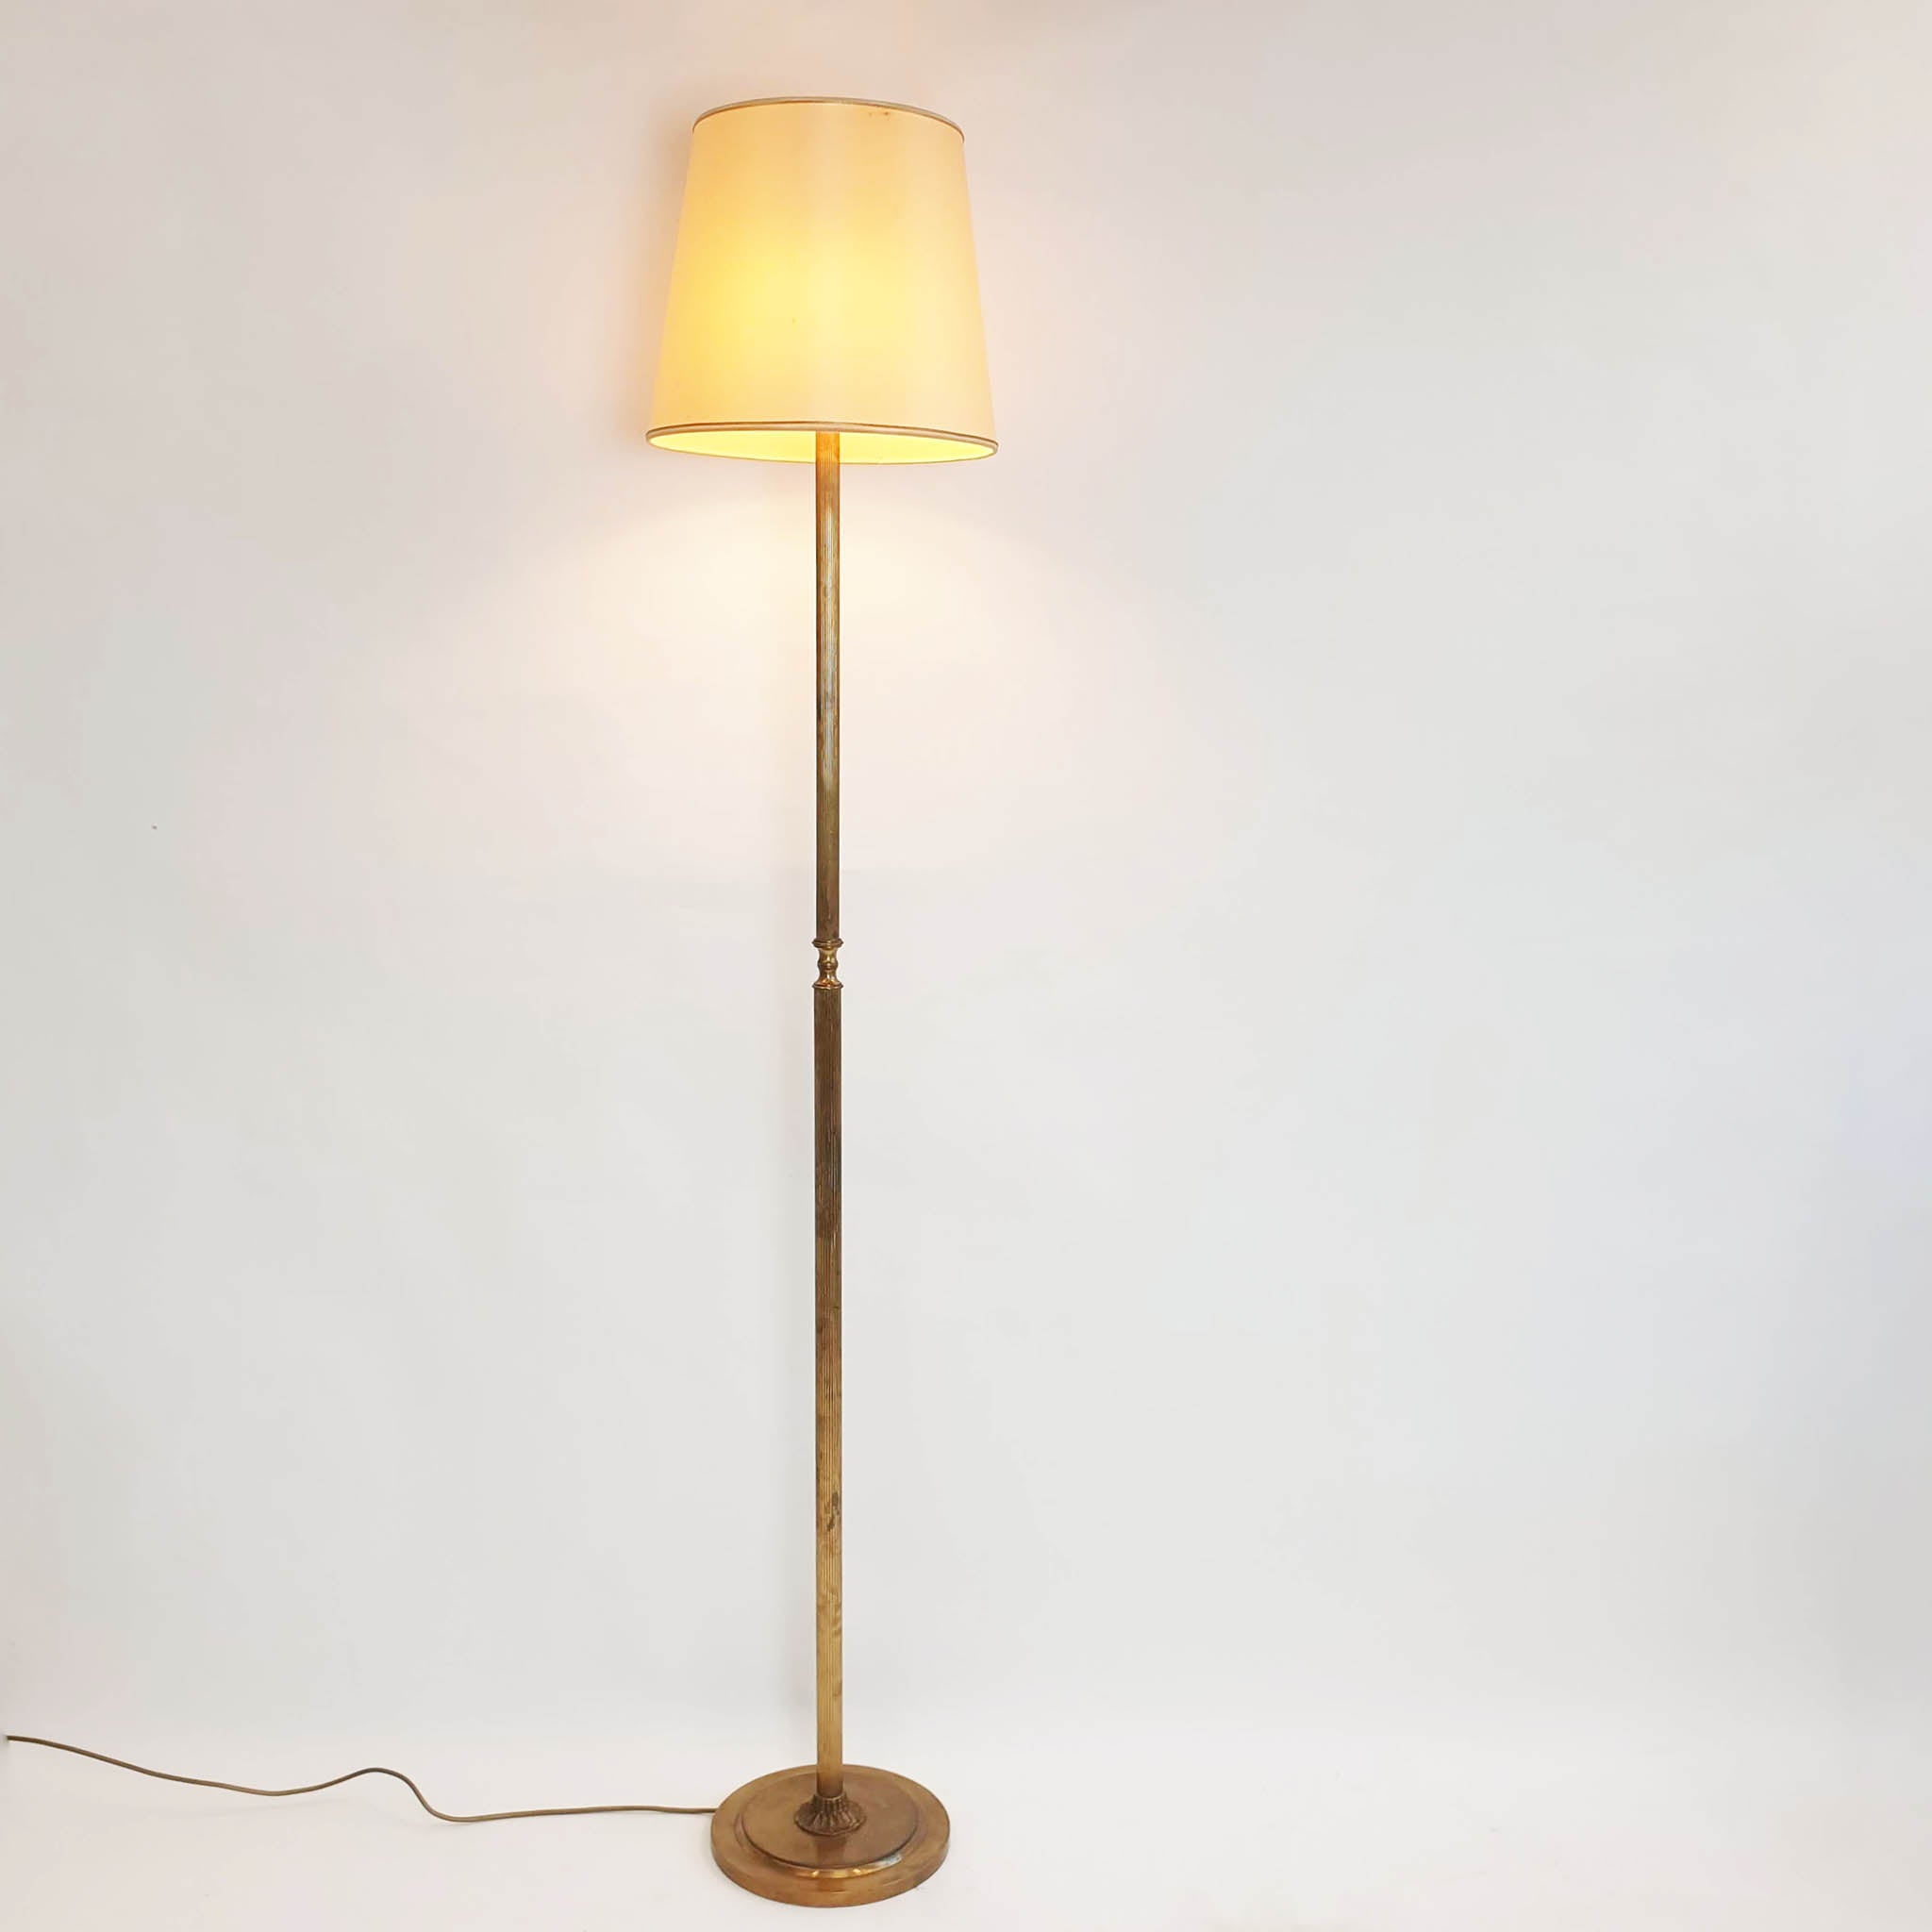 Vintage Italian brass floor lamp